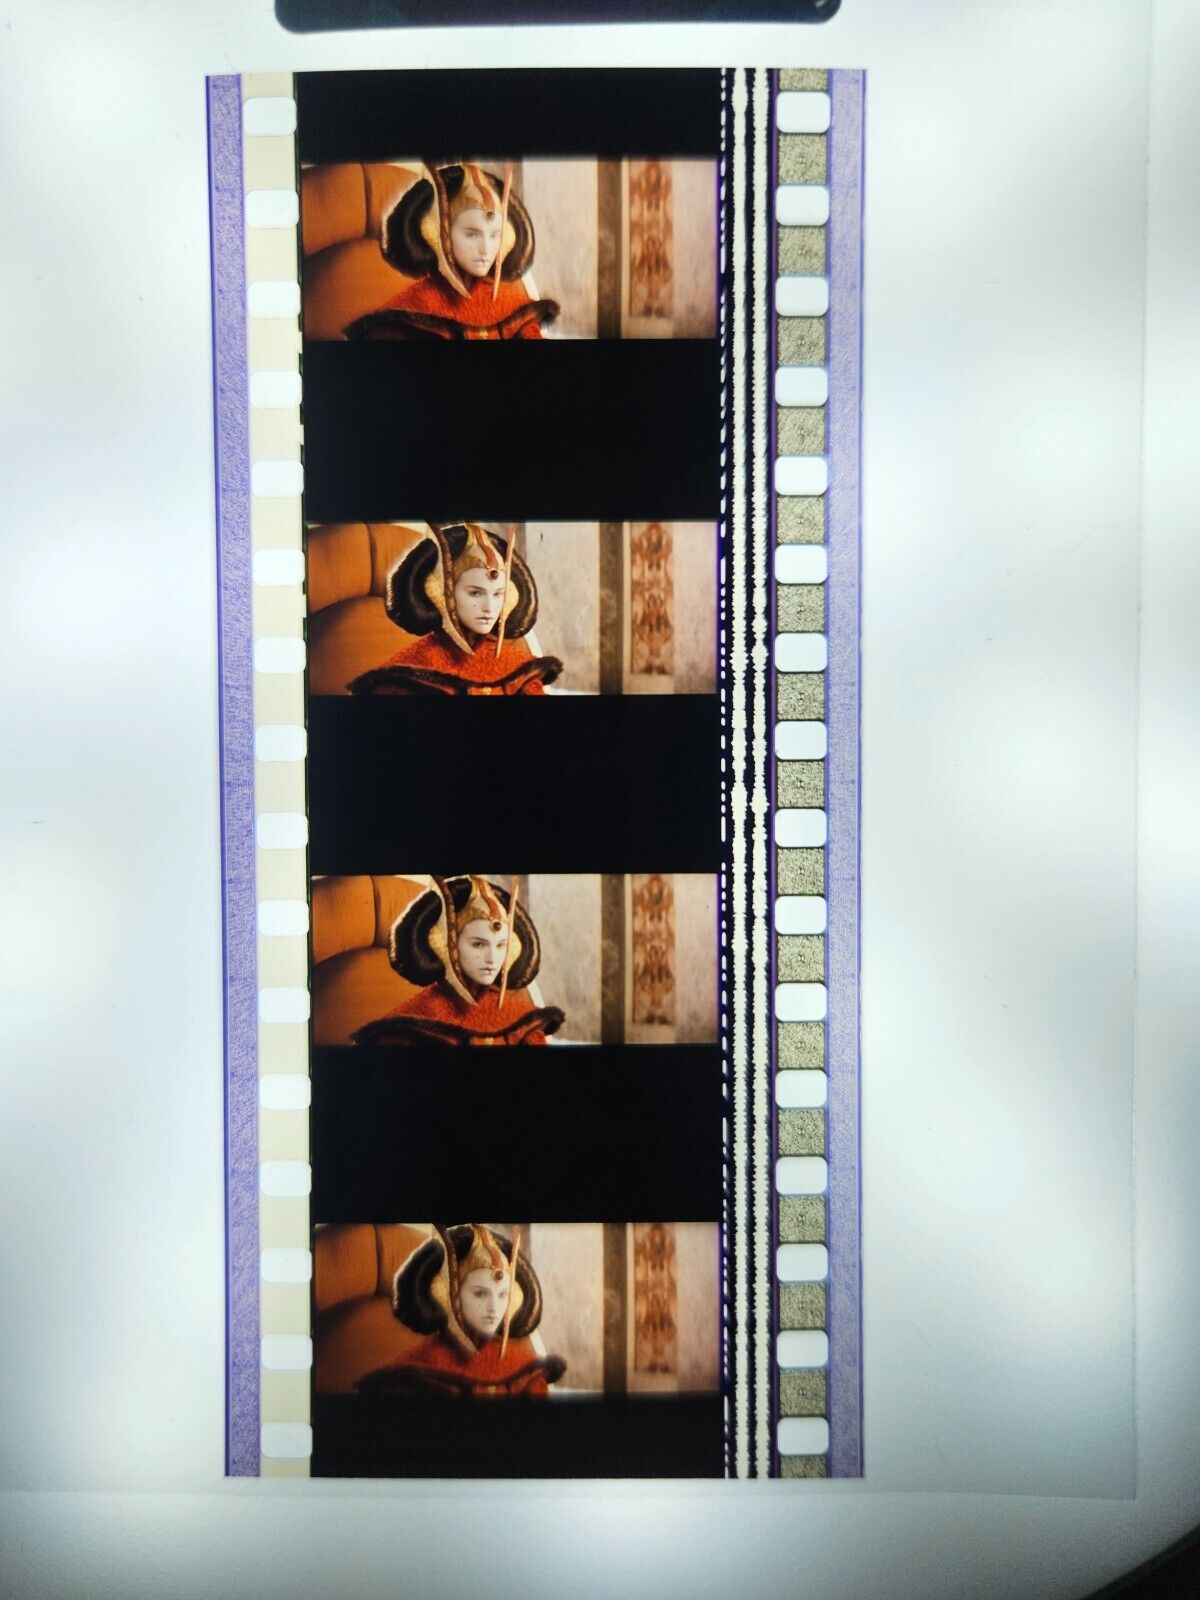 Queen Amidala Star Wars Episode 1 Phantom Menace 35mm Original Film Cells SW2067 Star Wars 35mm Film Cell - Hobby Gems